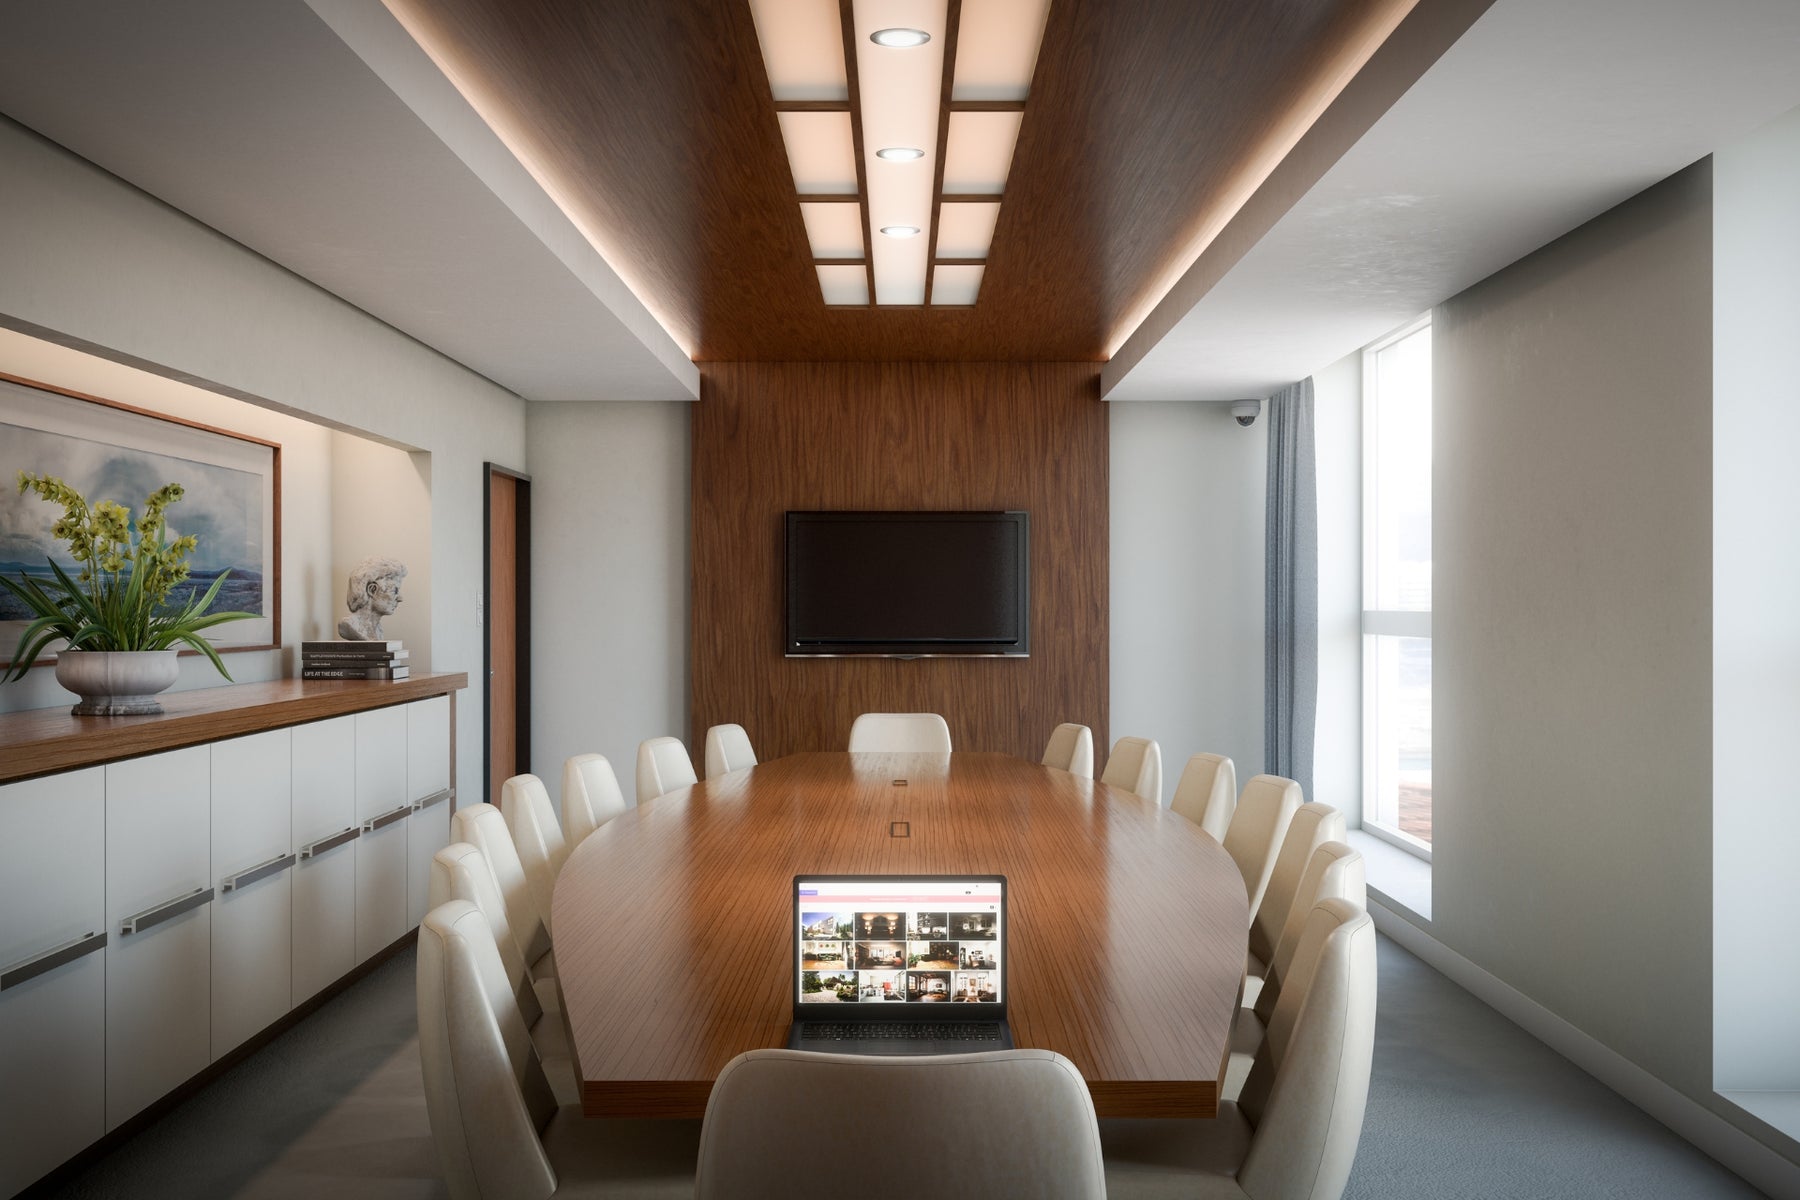 Conference Room Design - Freedman's Office Furniture - Main